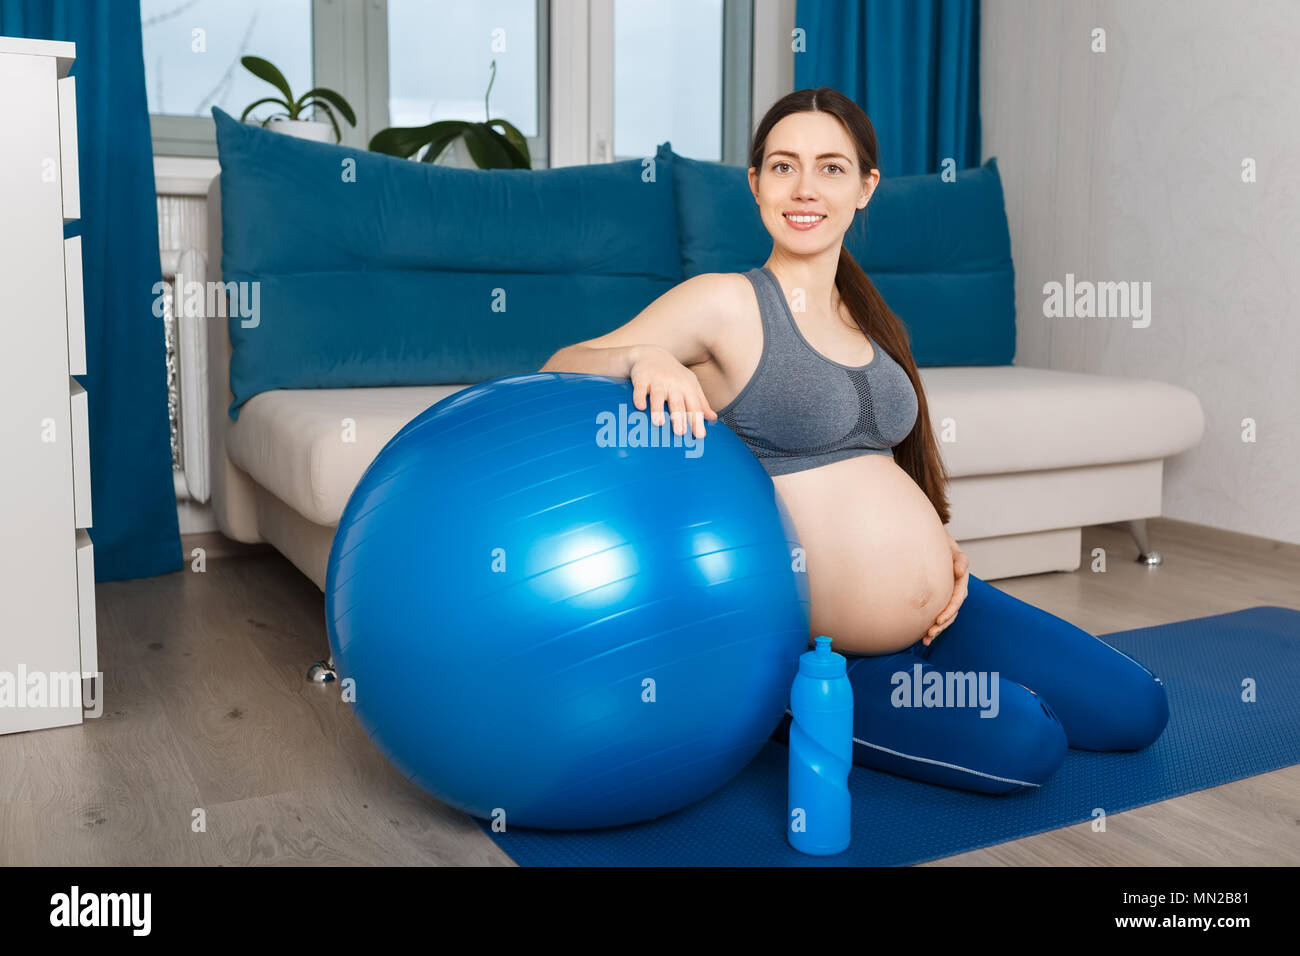 Joven Embarazada sentada en gimnasia chica pelota ejercicios con fitball  trabajo embarazo saludable gimnasia femenina concepto cartoon Imagen Vector  de stock - Alamy